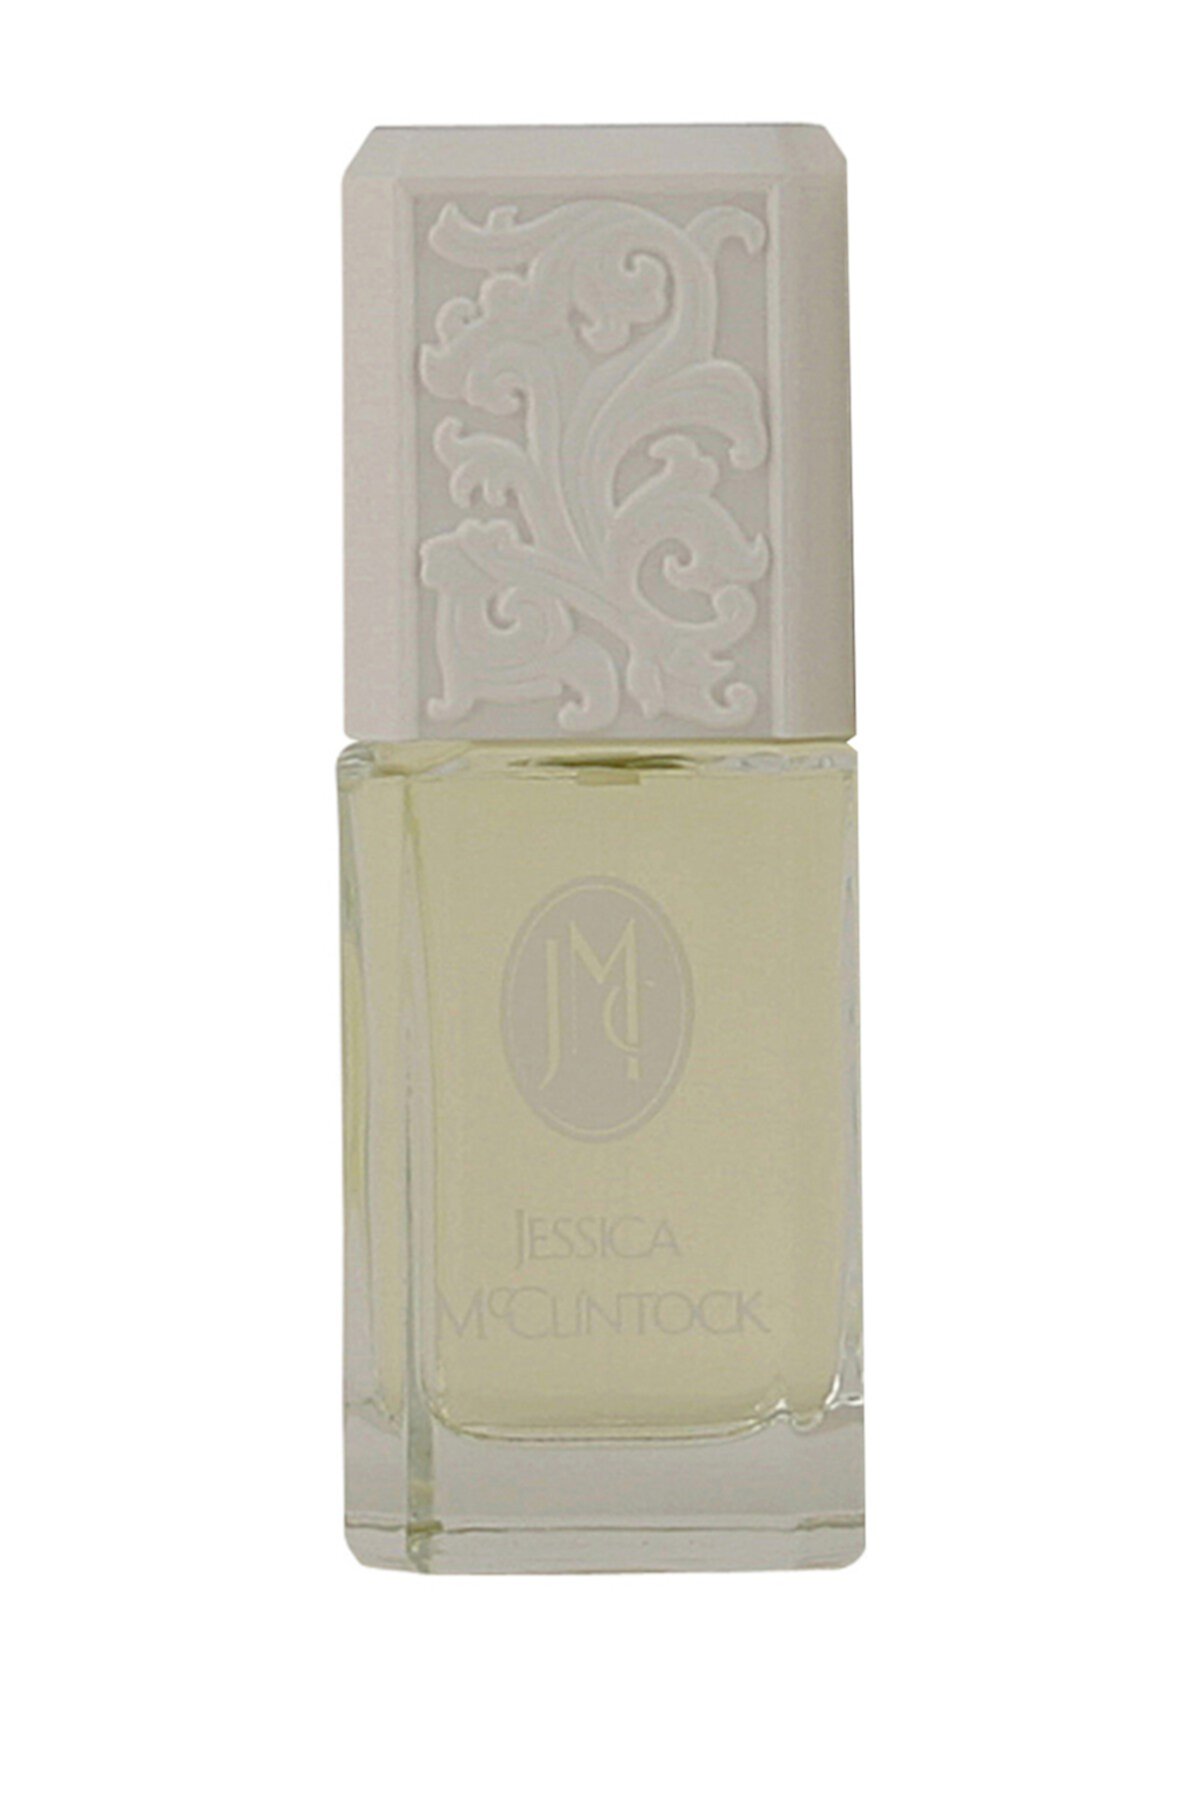 Jessica McClintock Signature Eau de Parfum Spray - 1,7 унции. Jessica McClintock